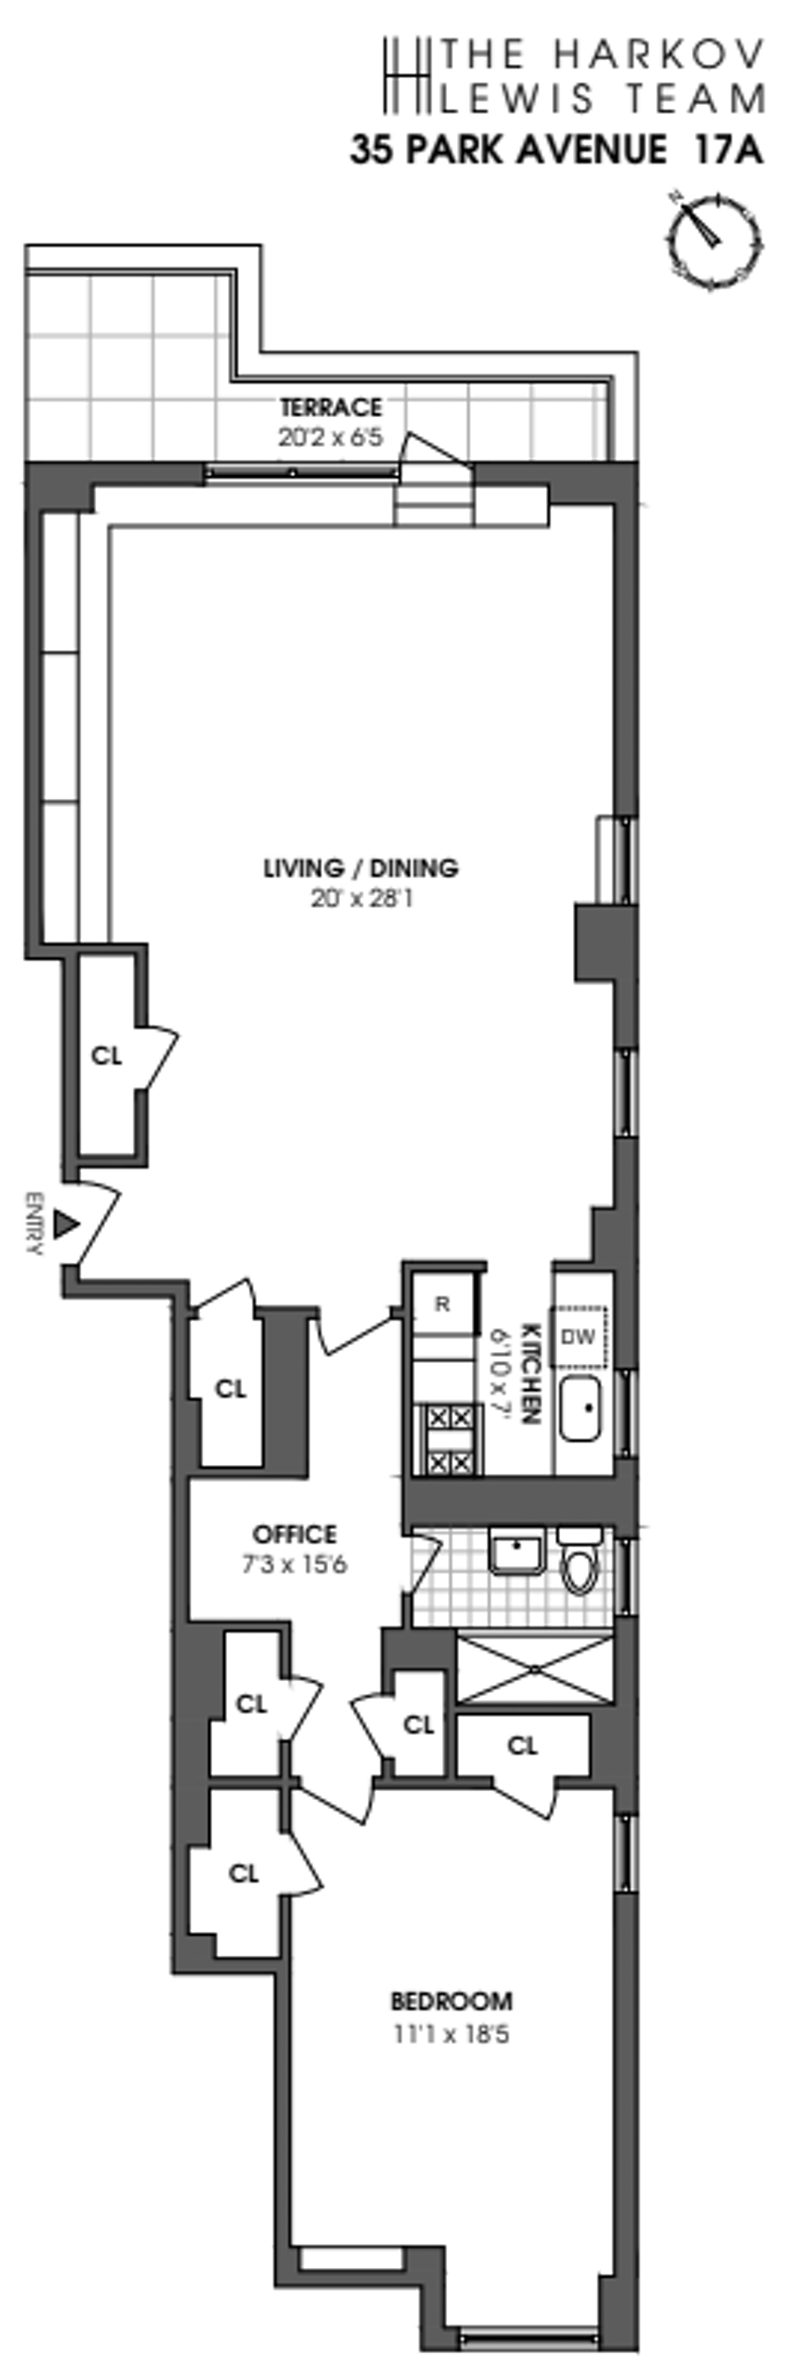 Floorplan for 35 Park Avenue, 17A